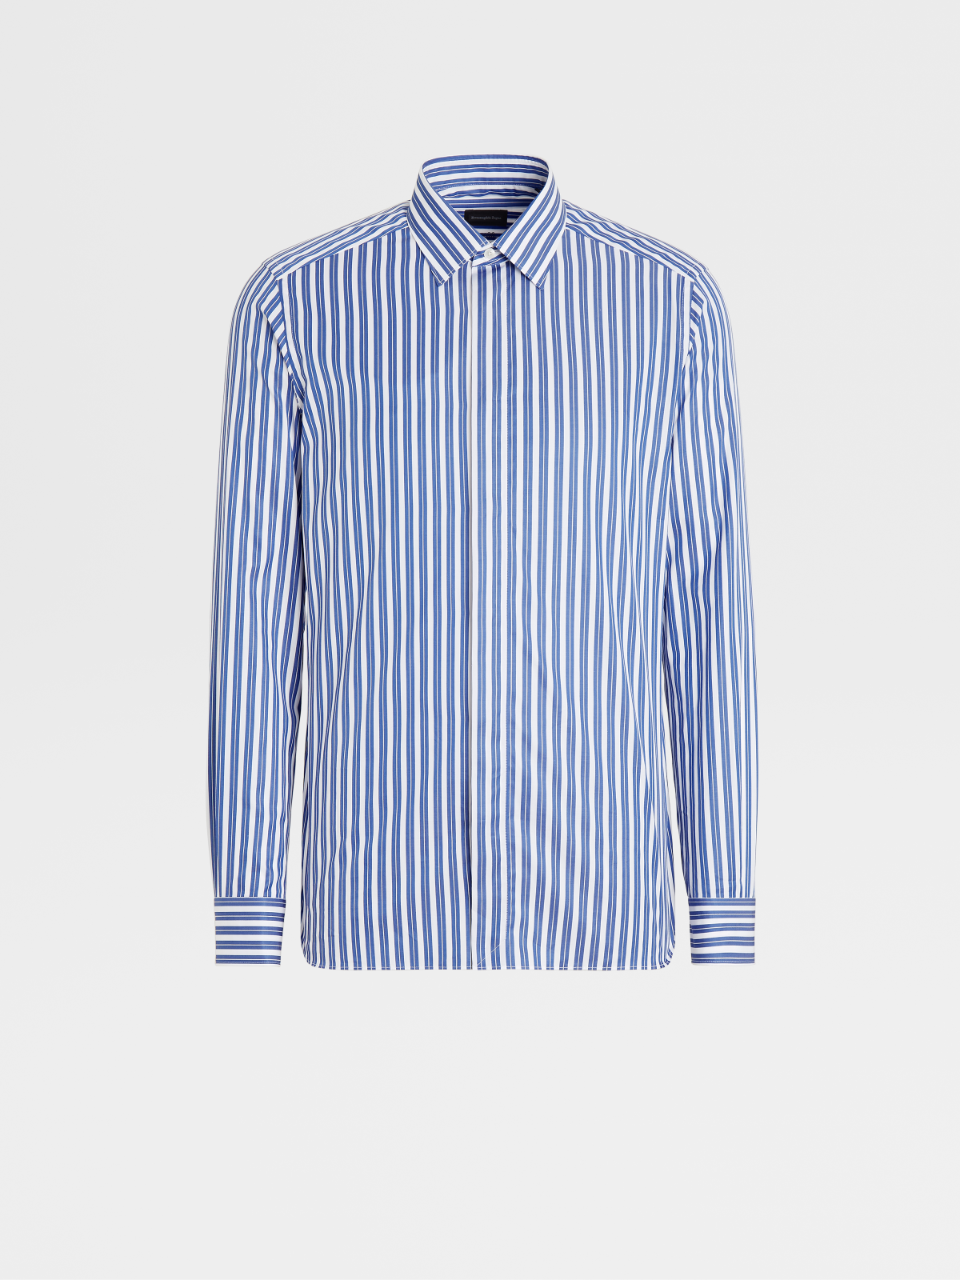 Micro-striped Ink Blue 100fili Cotton Tailoring Shirt, City Slim Fit